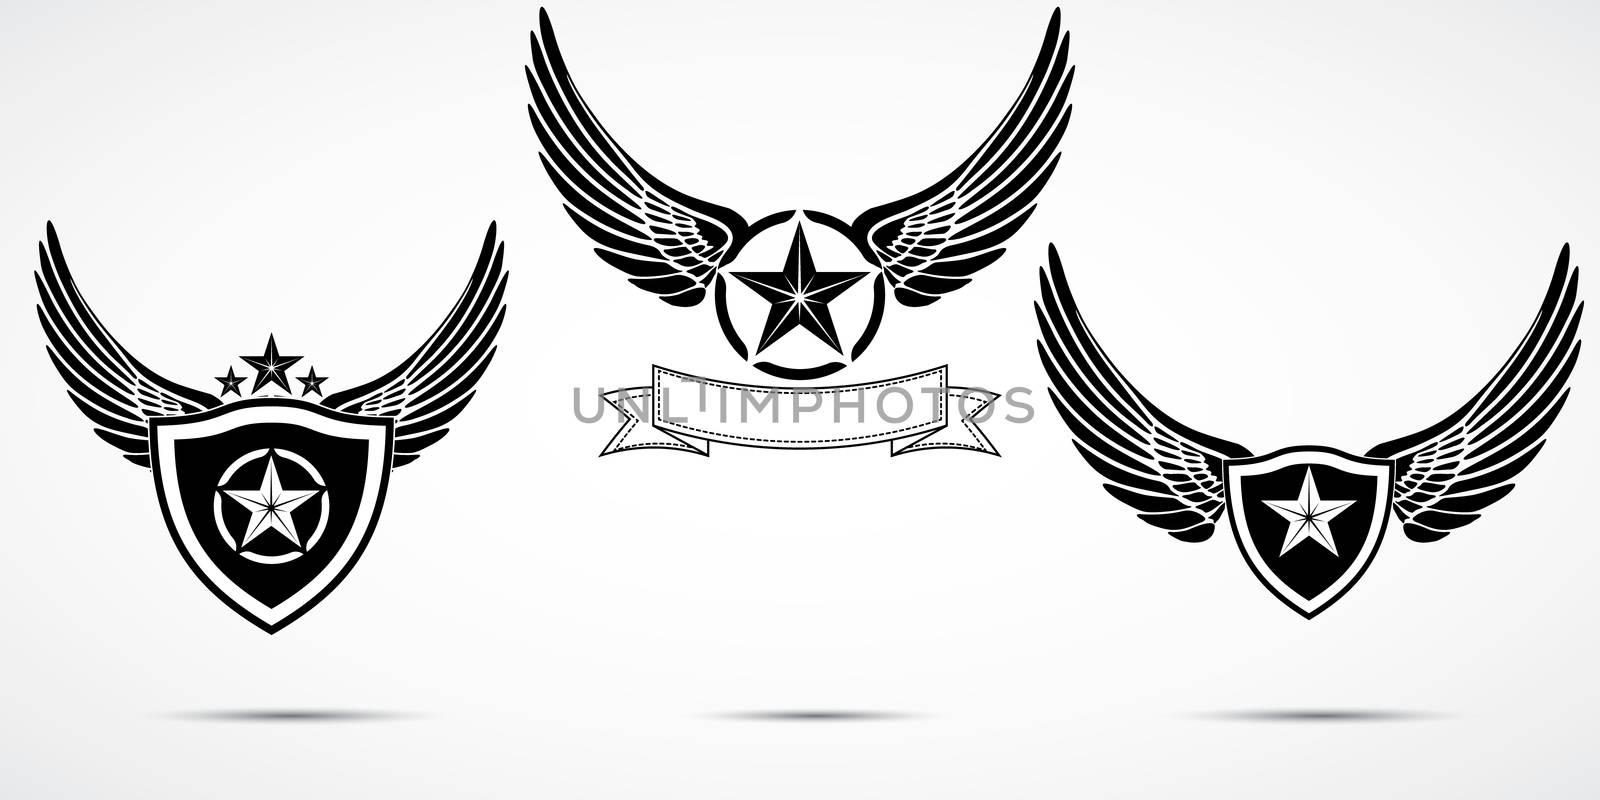 Wing abstract emblem set, logo template, badge label, icon, tattoo design by Lemon_workshop